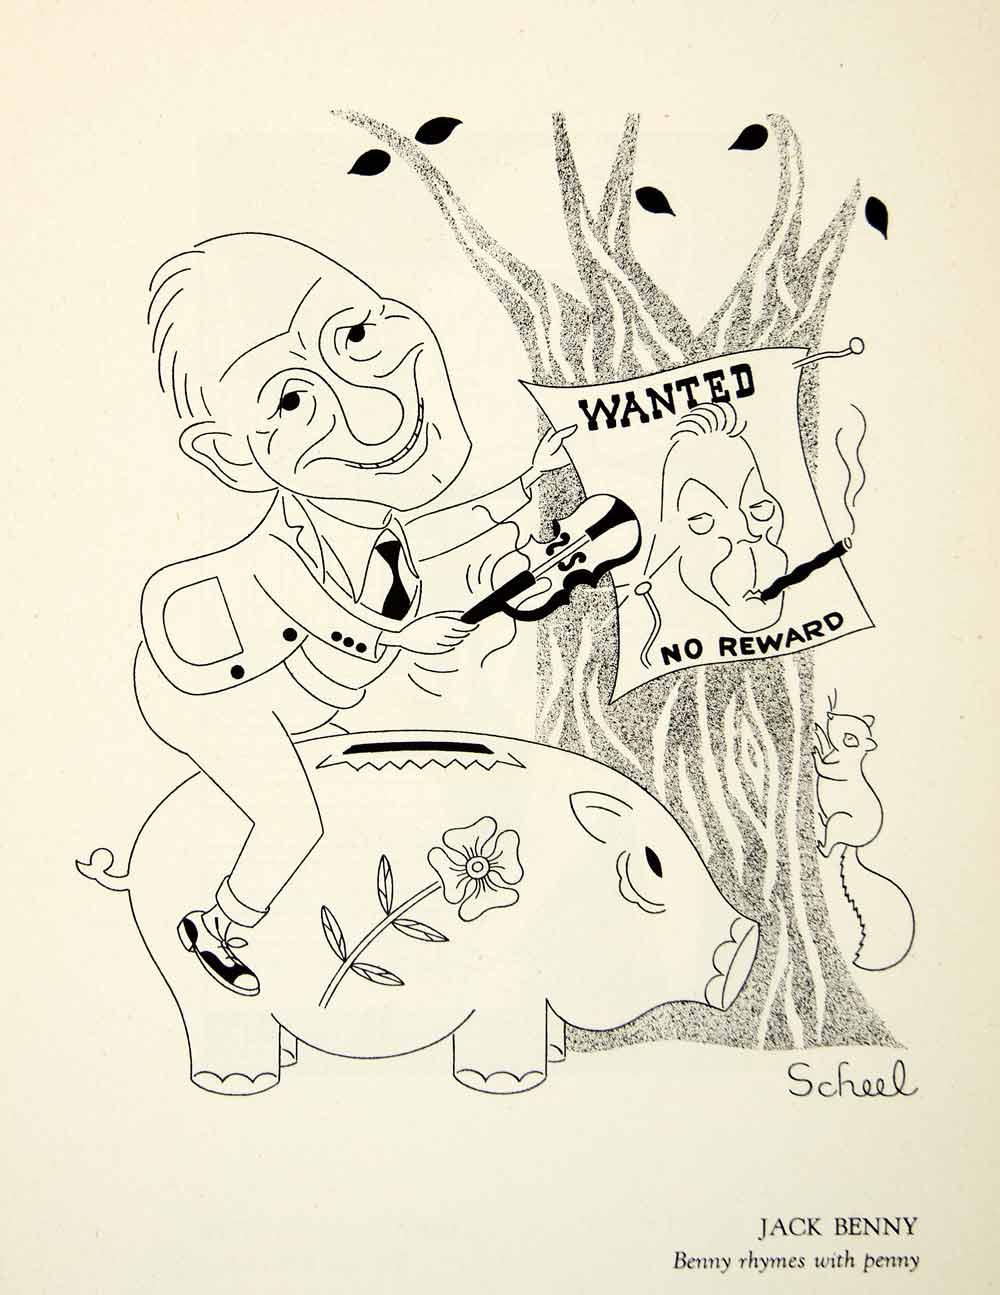 1951 Offset Lithograph Jack Benny Caricature Theodor Scheel Wanted Piggy Bank